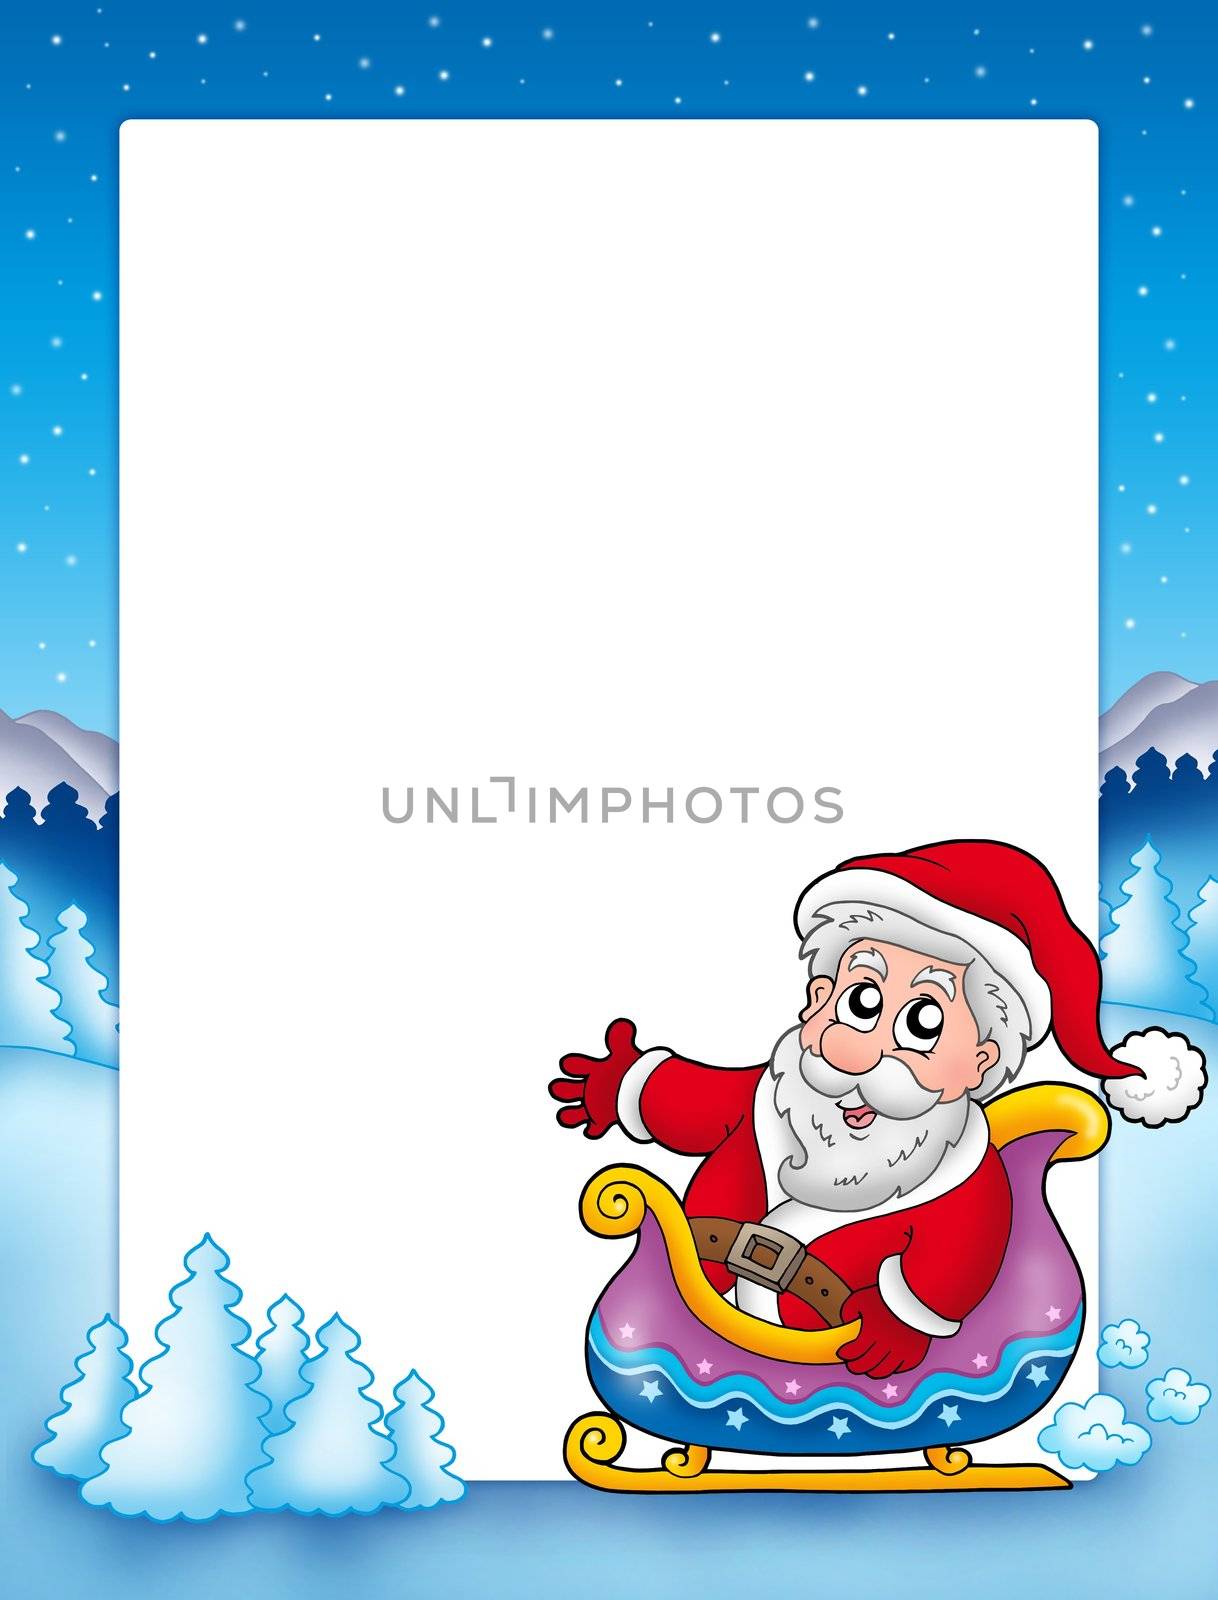 Christmas frame with Santa on sledge - color illustration.